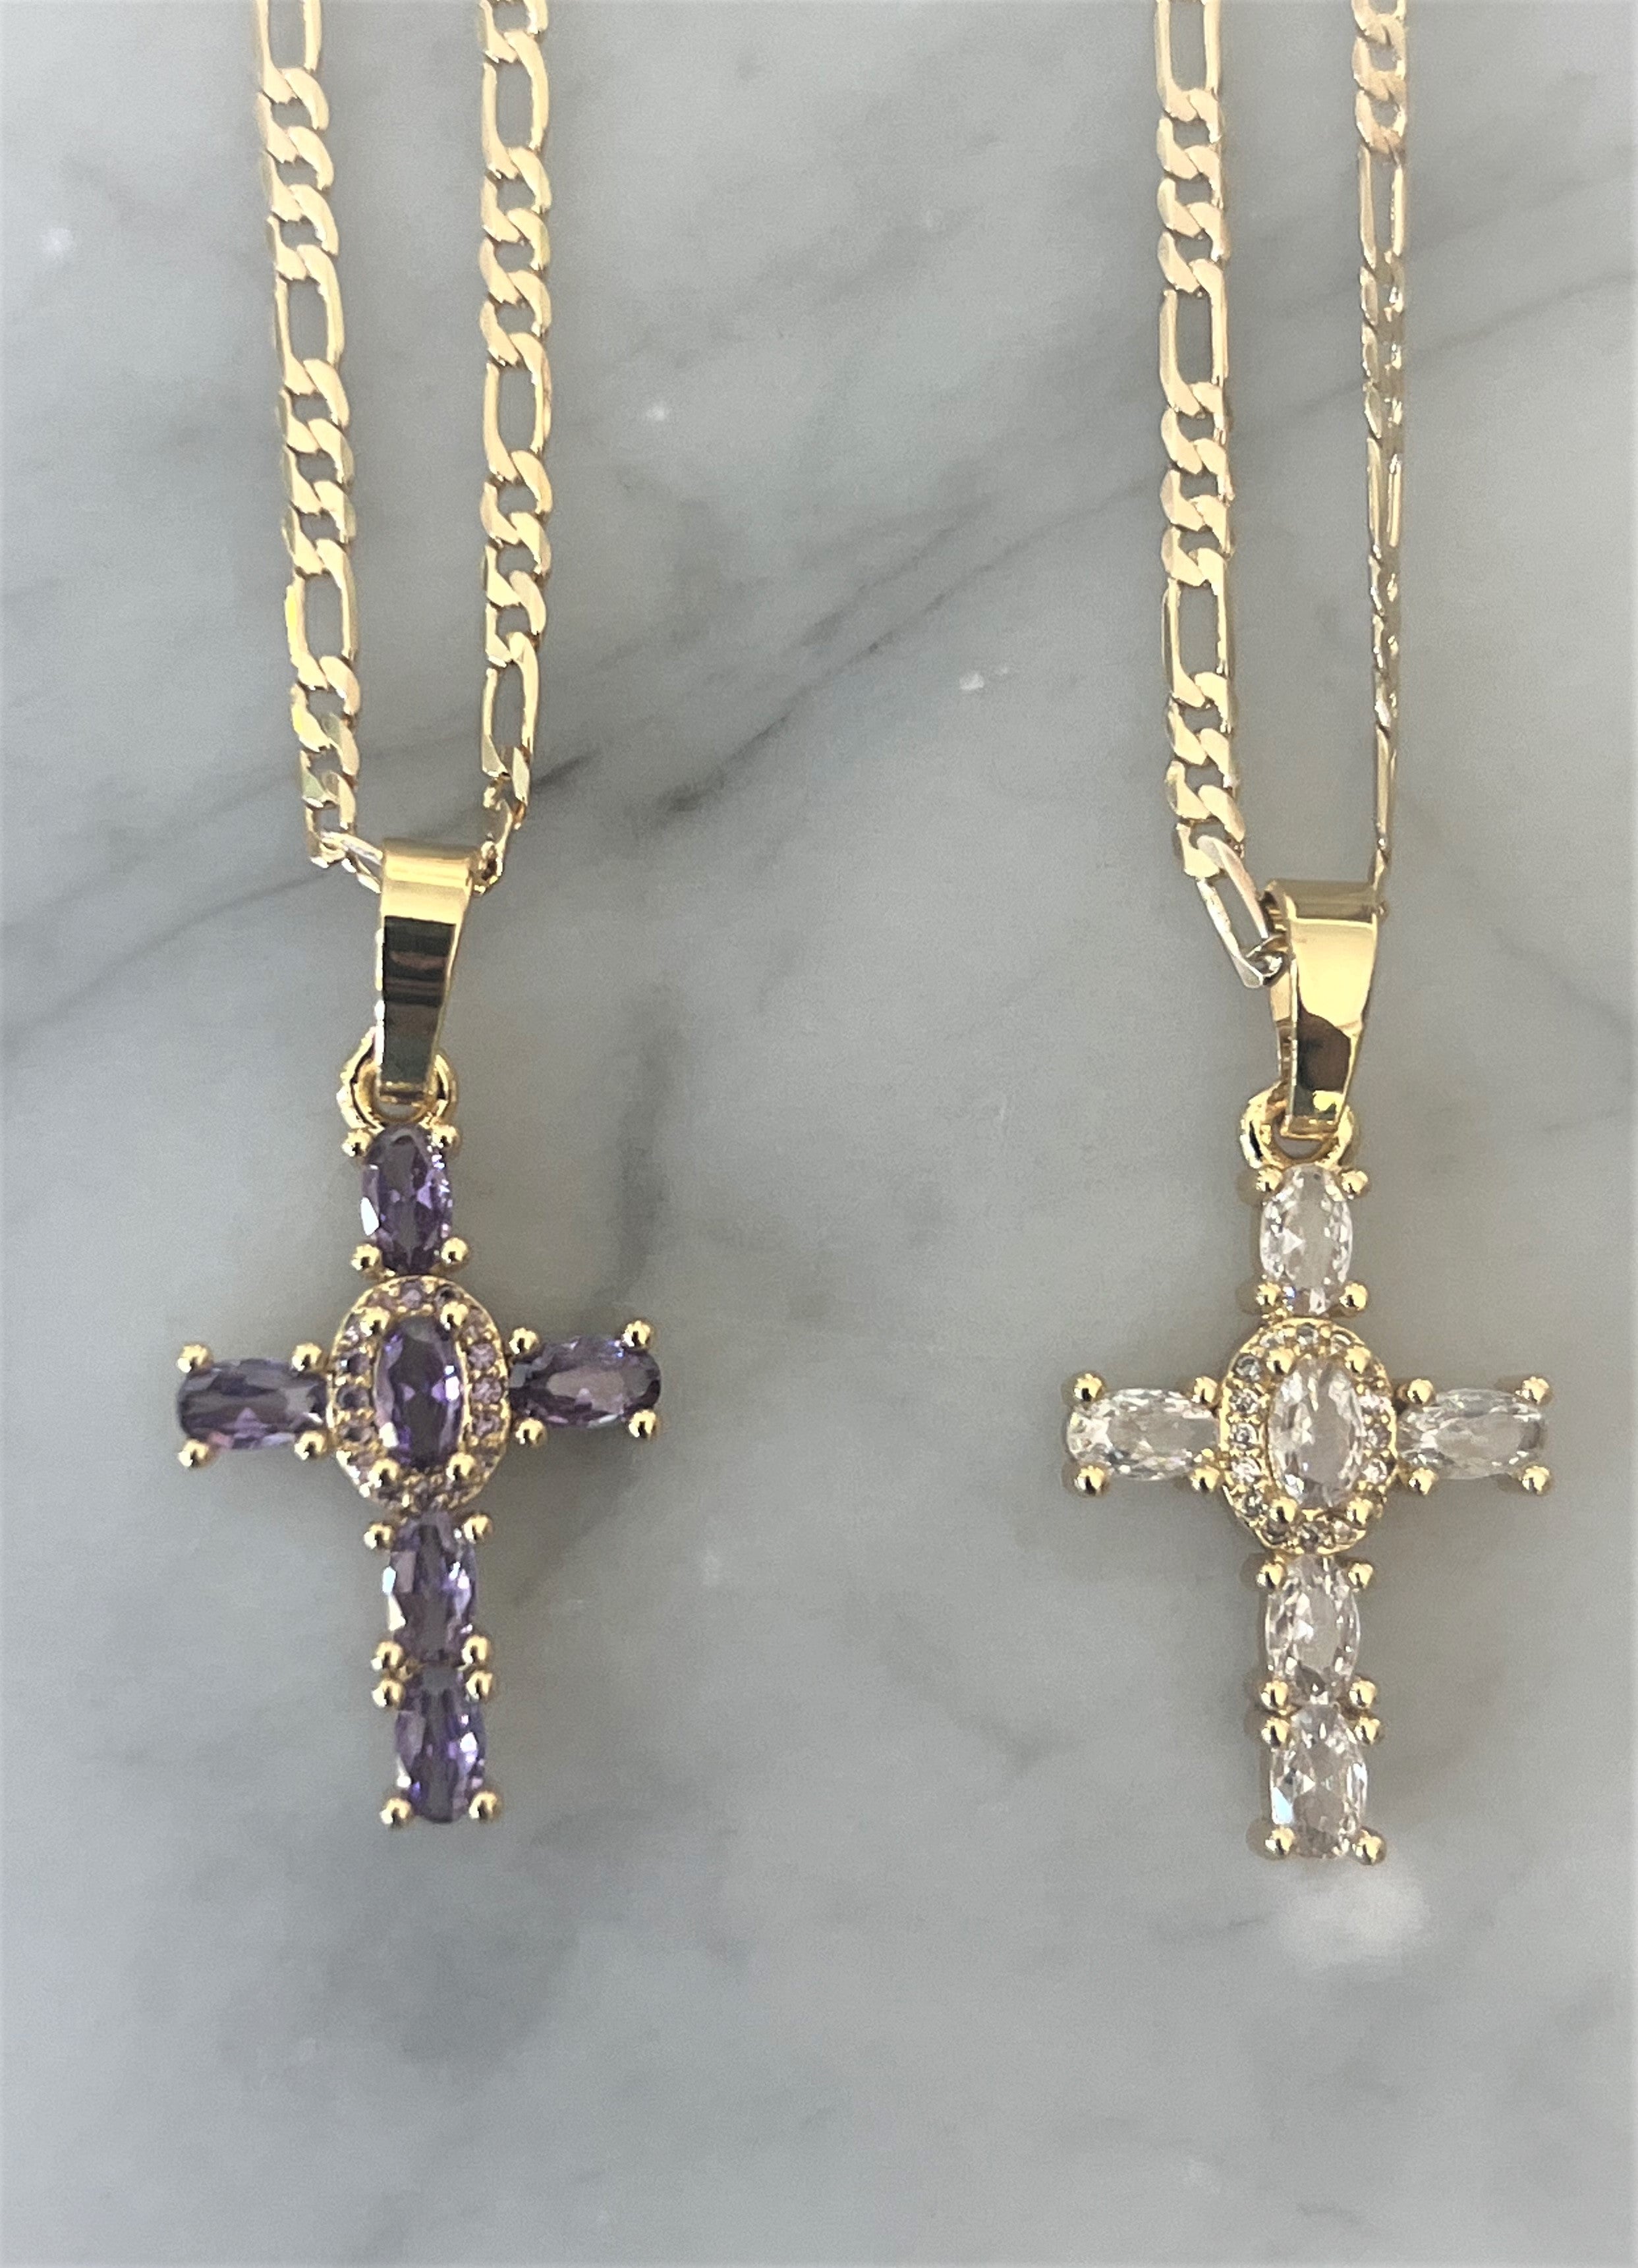 Baguette Figaro Cross Necklace